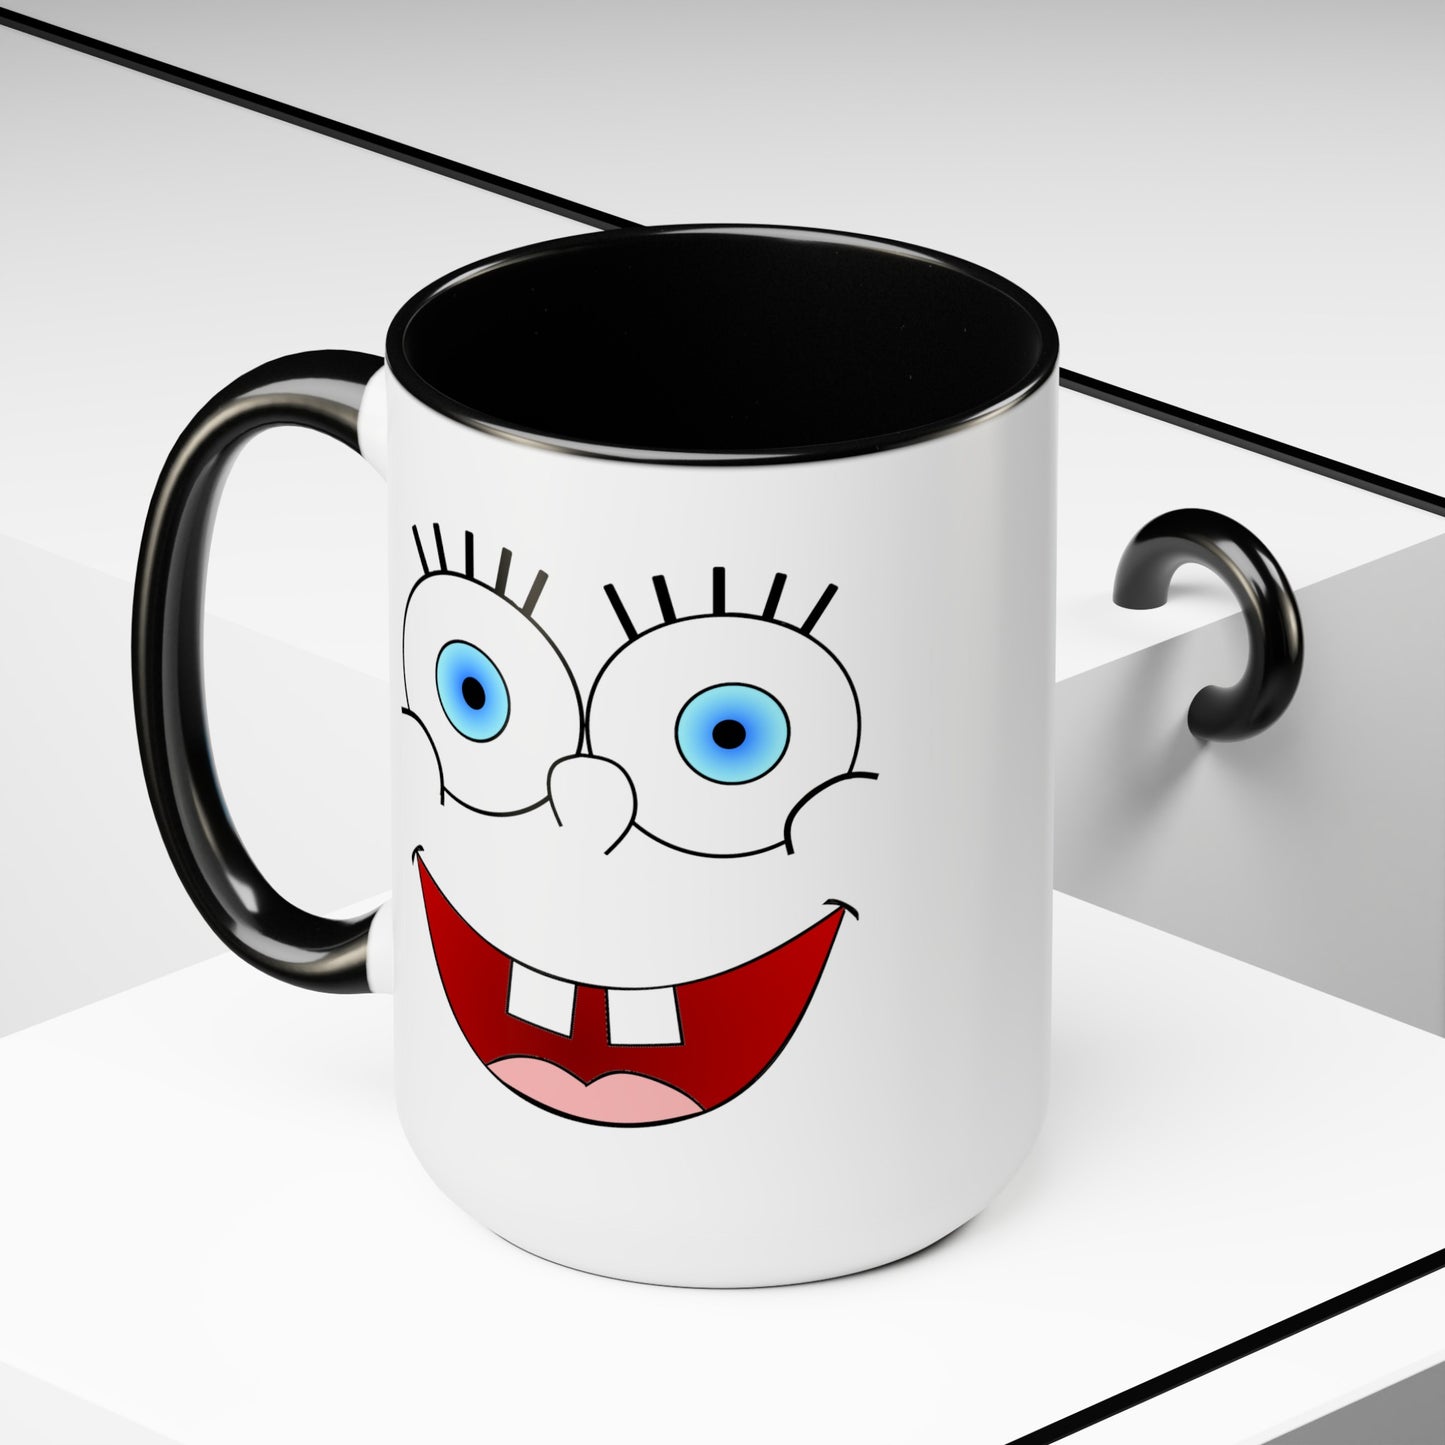 SpongeBob ish Coffee Mug - Double Sided Black Accent White Ceramic 15oz by TheGlassyLass.com